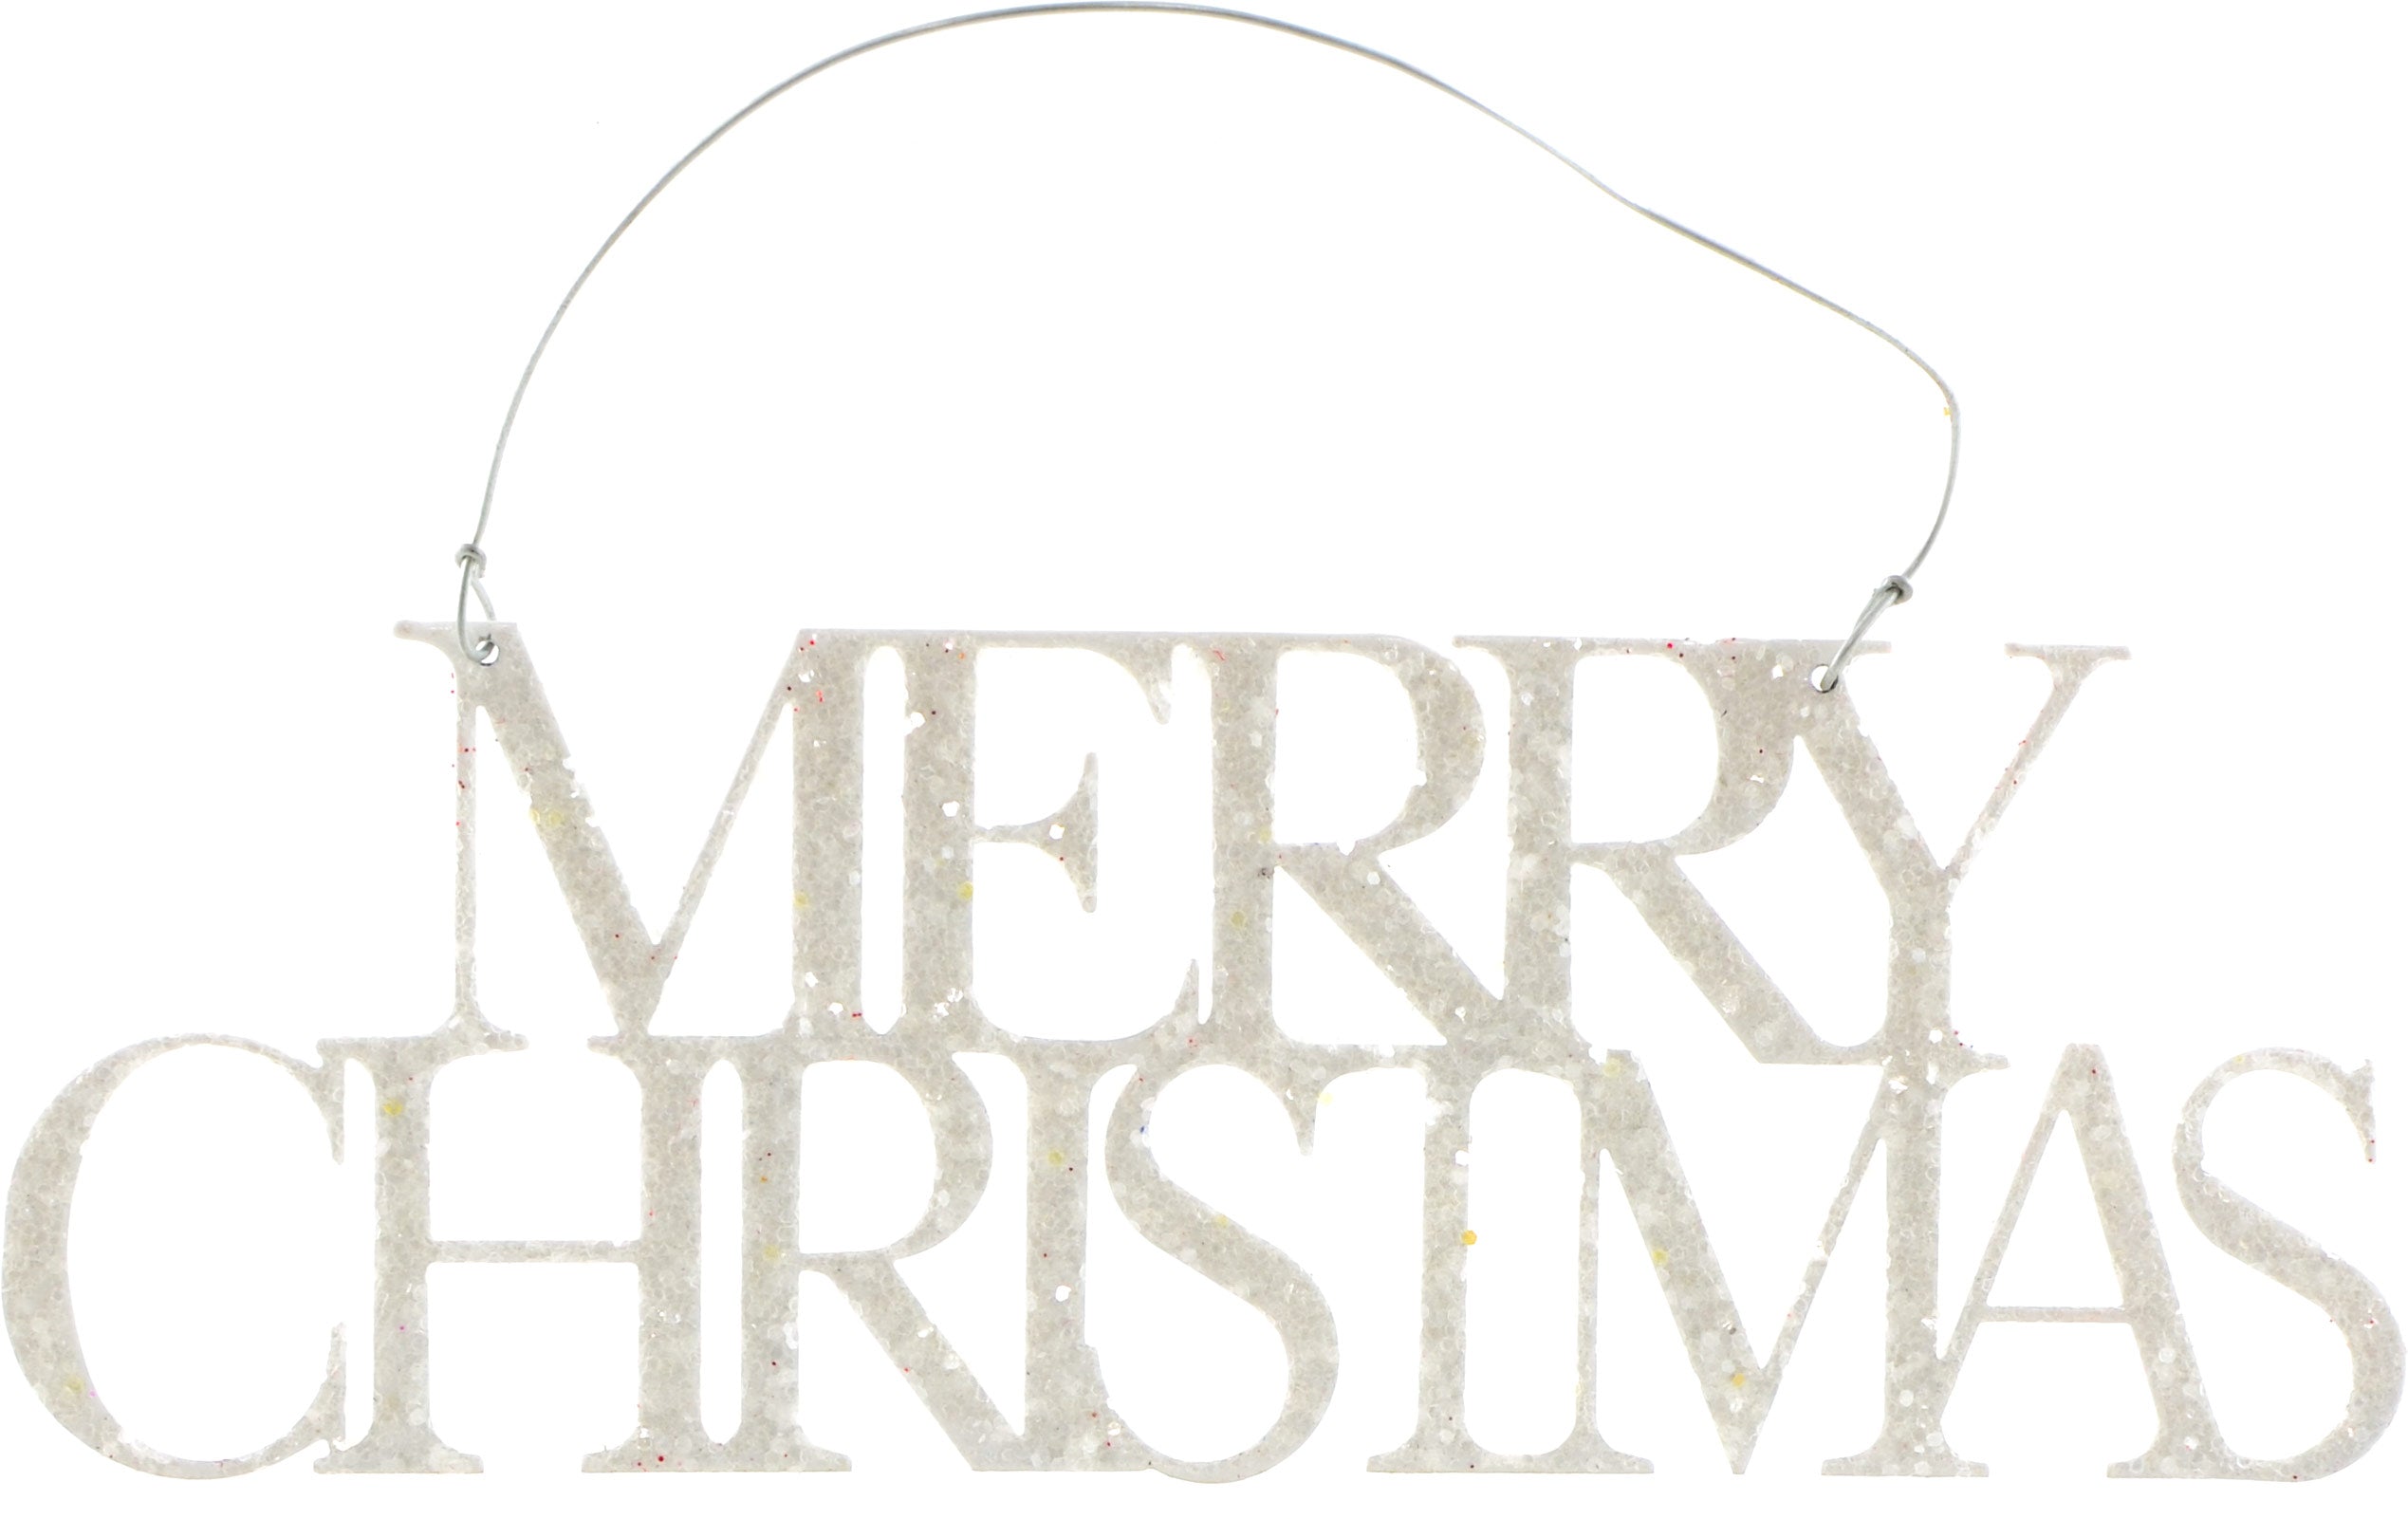 Glittered Words Ornament: White Merry Christmas